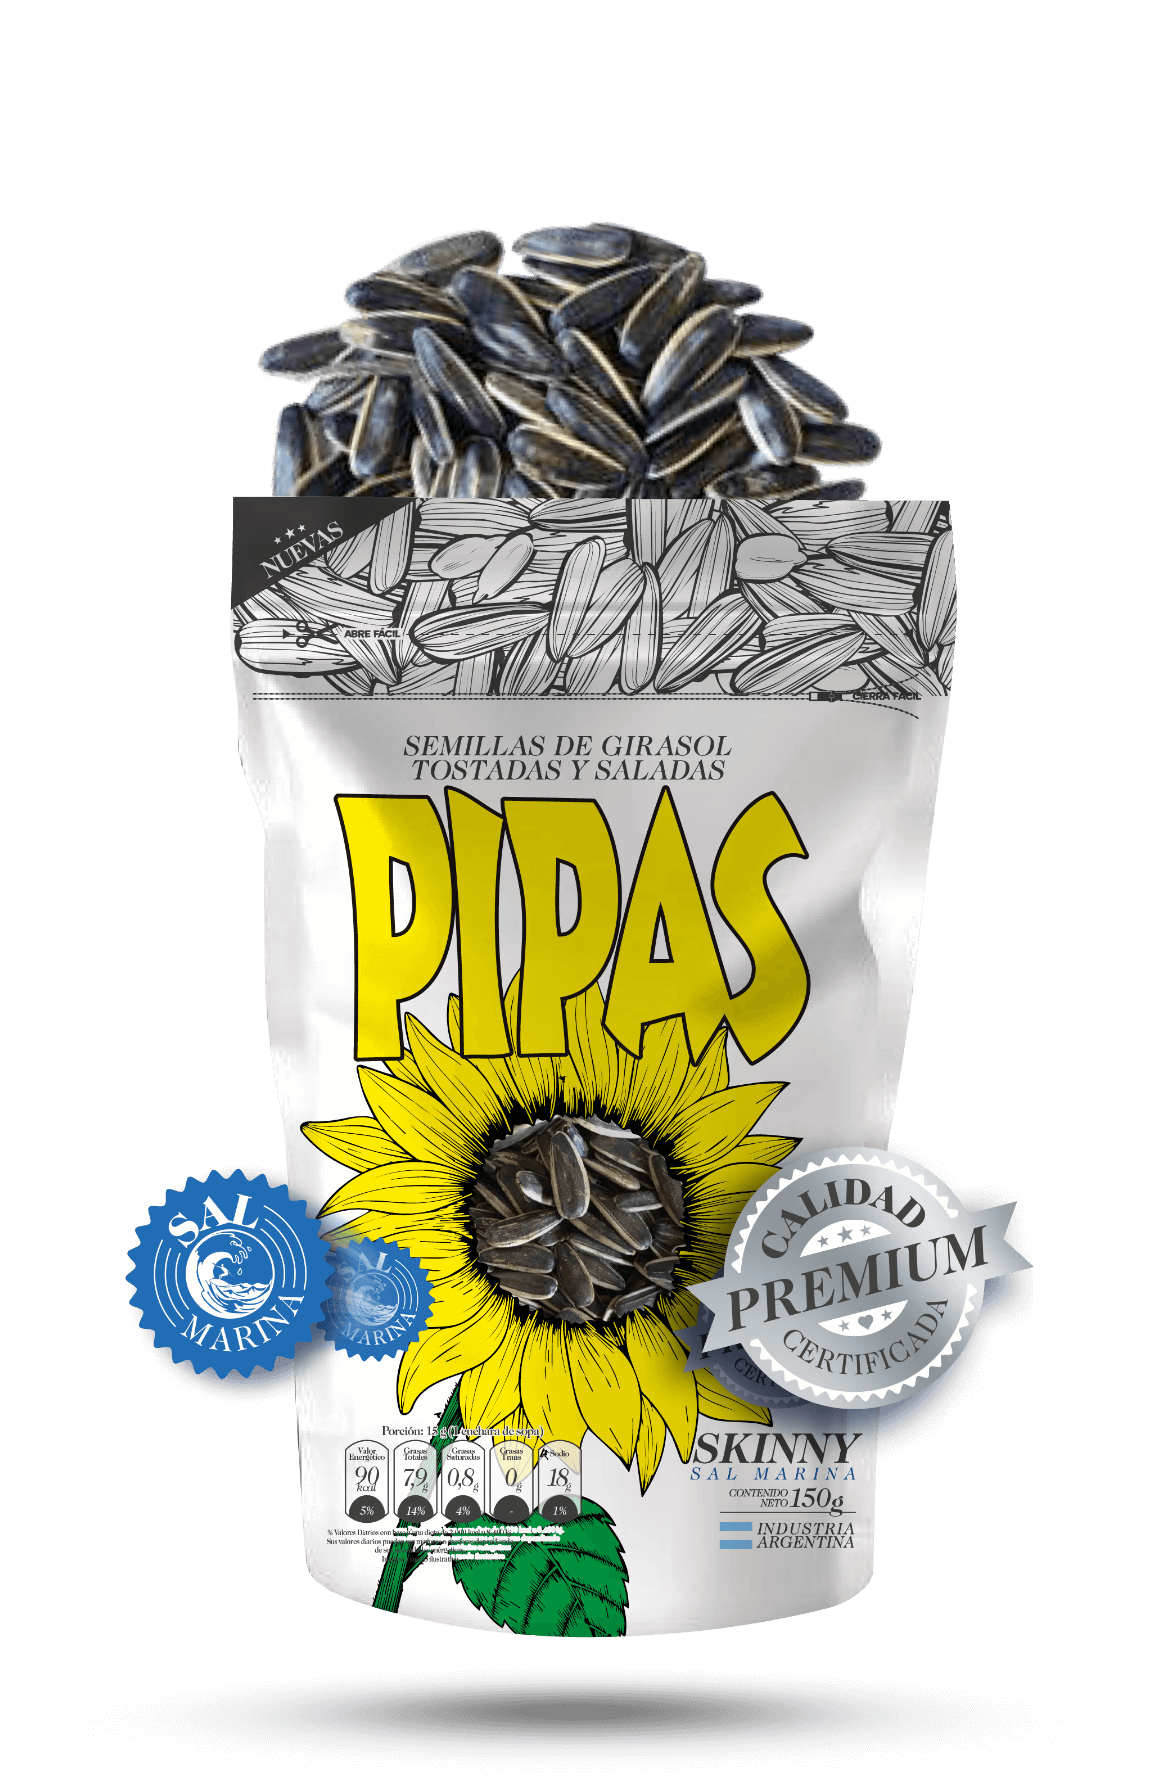 Pipas - Pipas De Girasol Tostadas Y Saladas Premium 180 Gr (Premium Roasted  and Salted Sunflower Seeds 5.29 Oz)